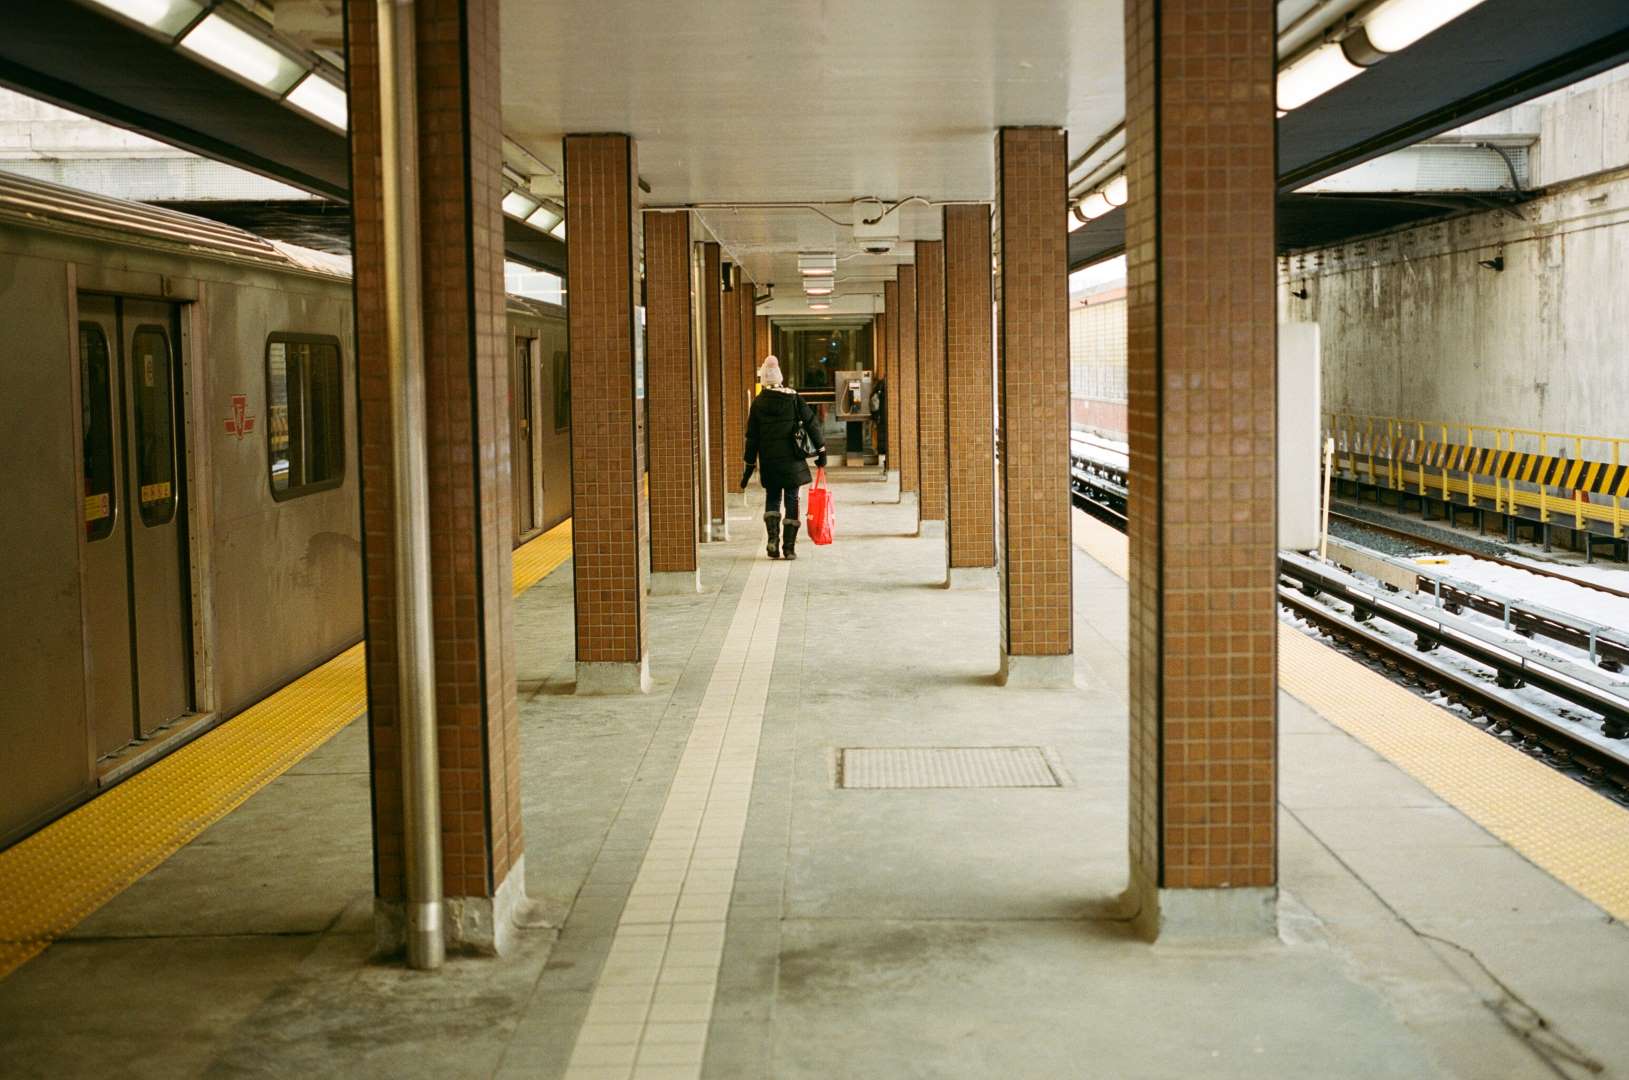 A colour photograph of a subway platform, a woman walks away towards the exit.